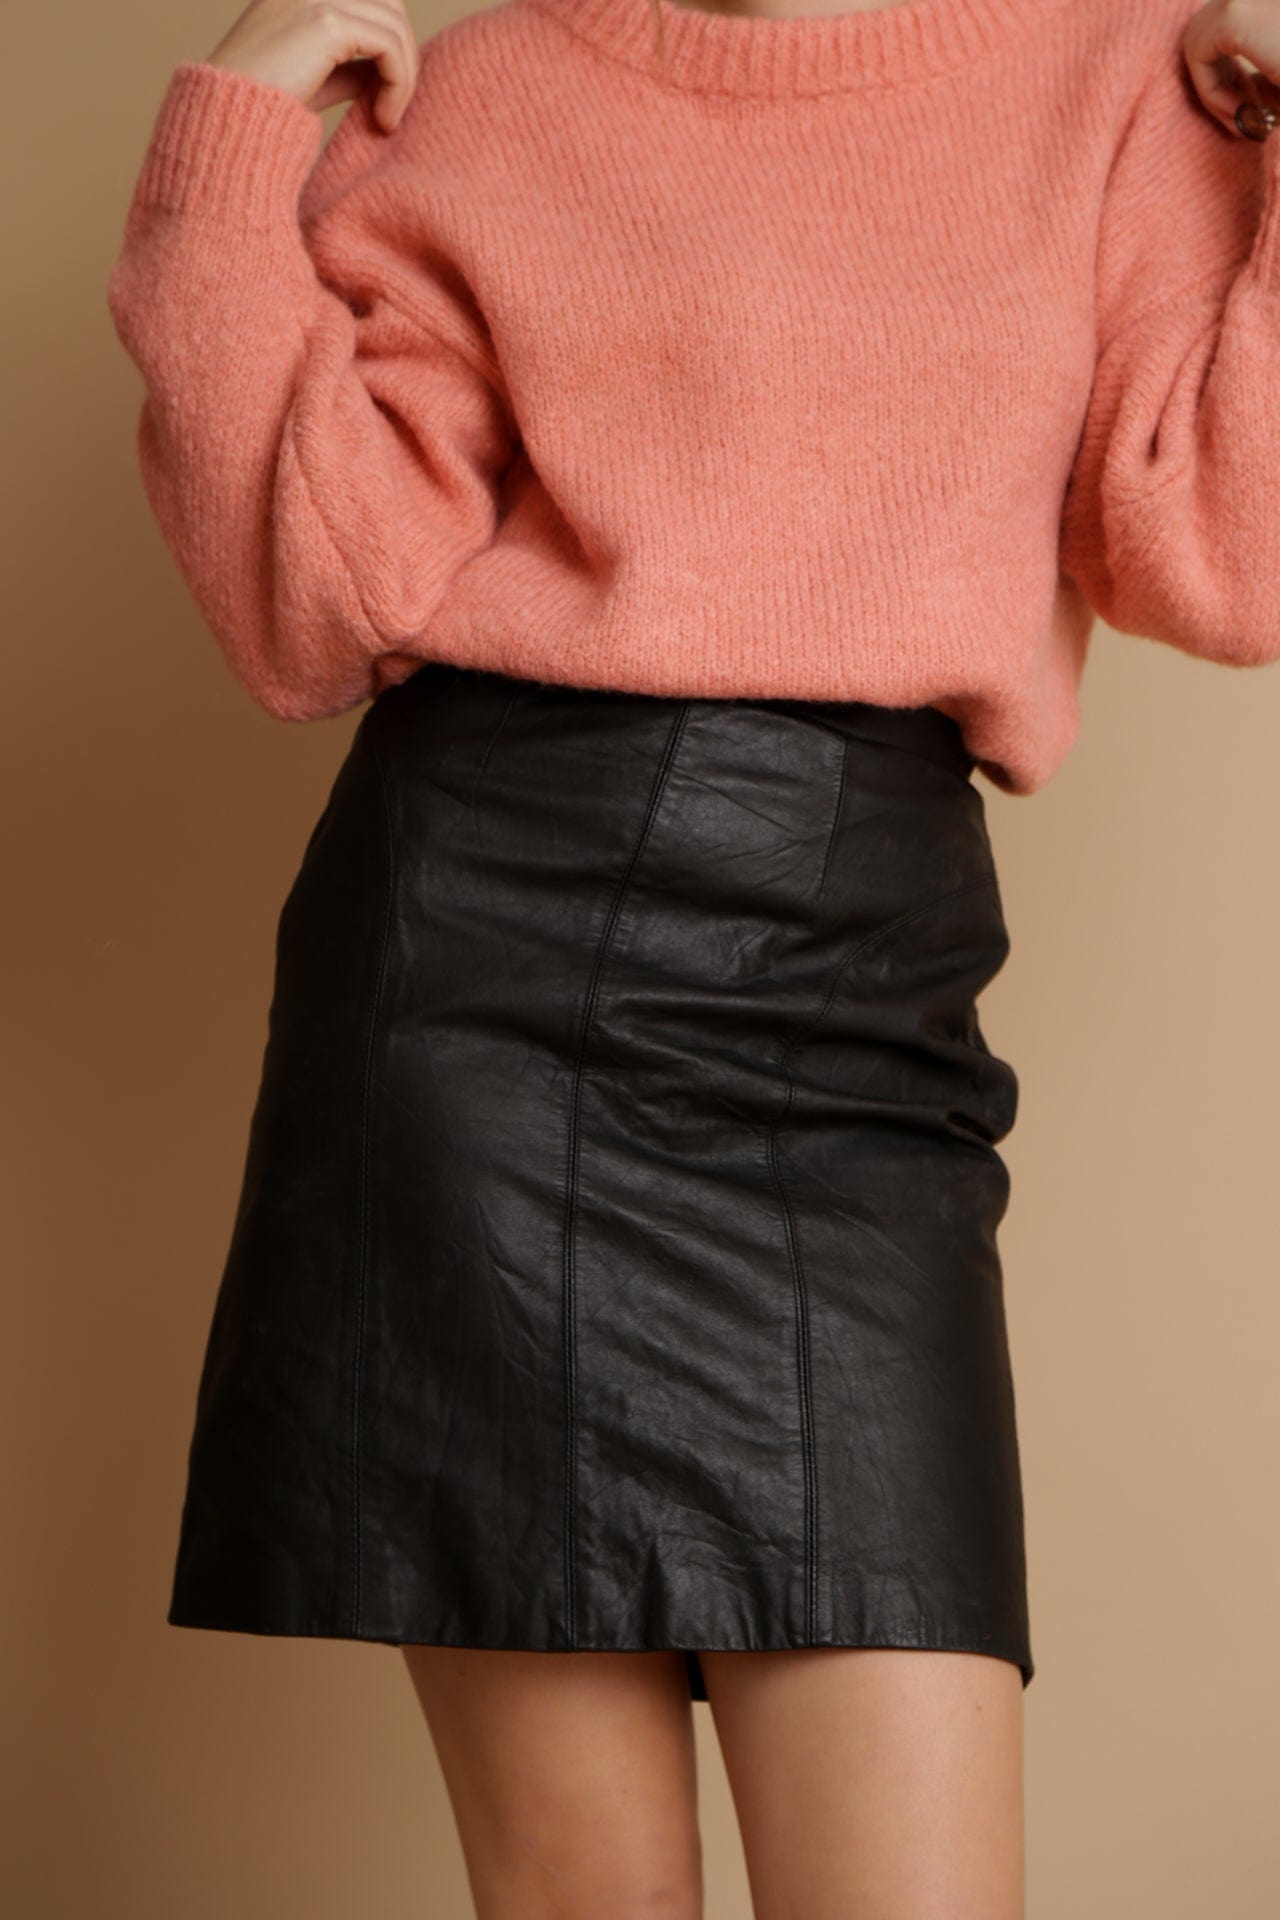 SisterGolden Skirts Lioness Vintage Leather Skirt